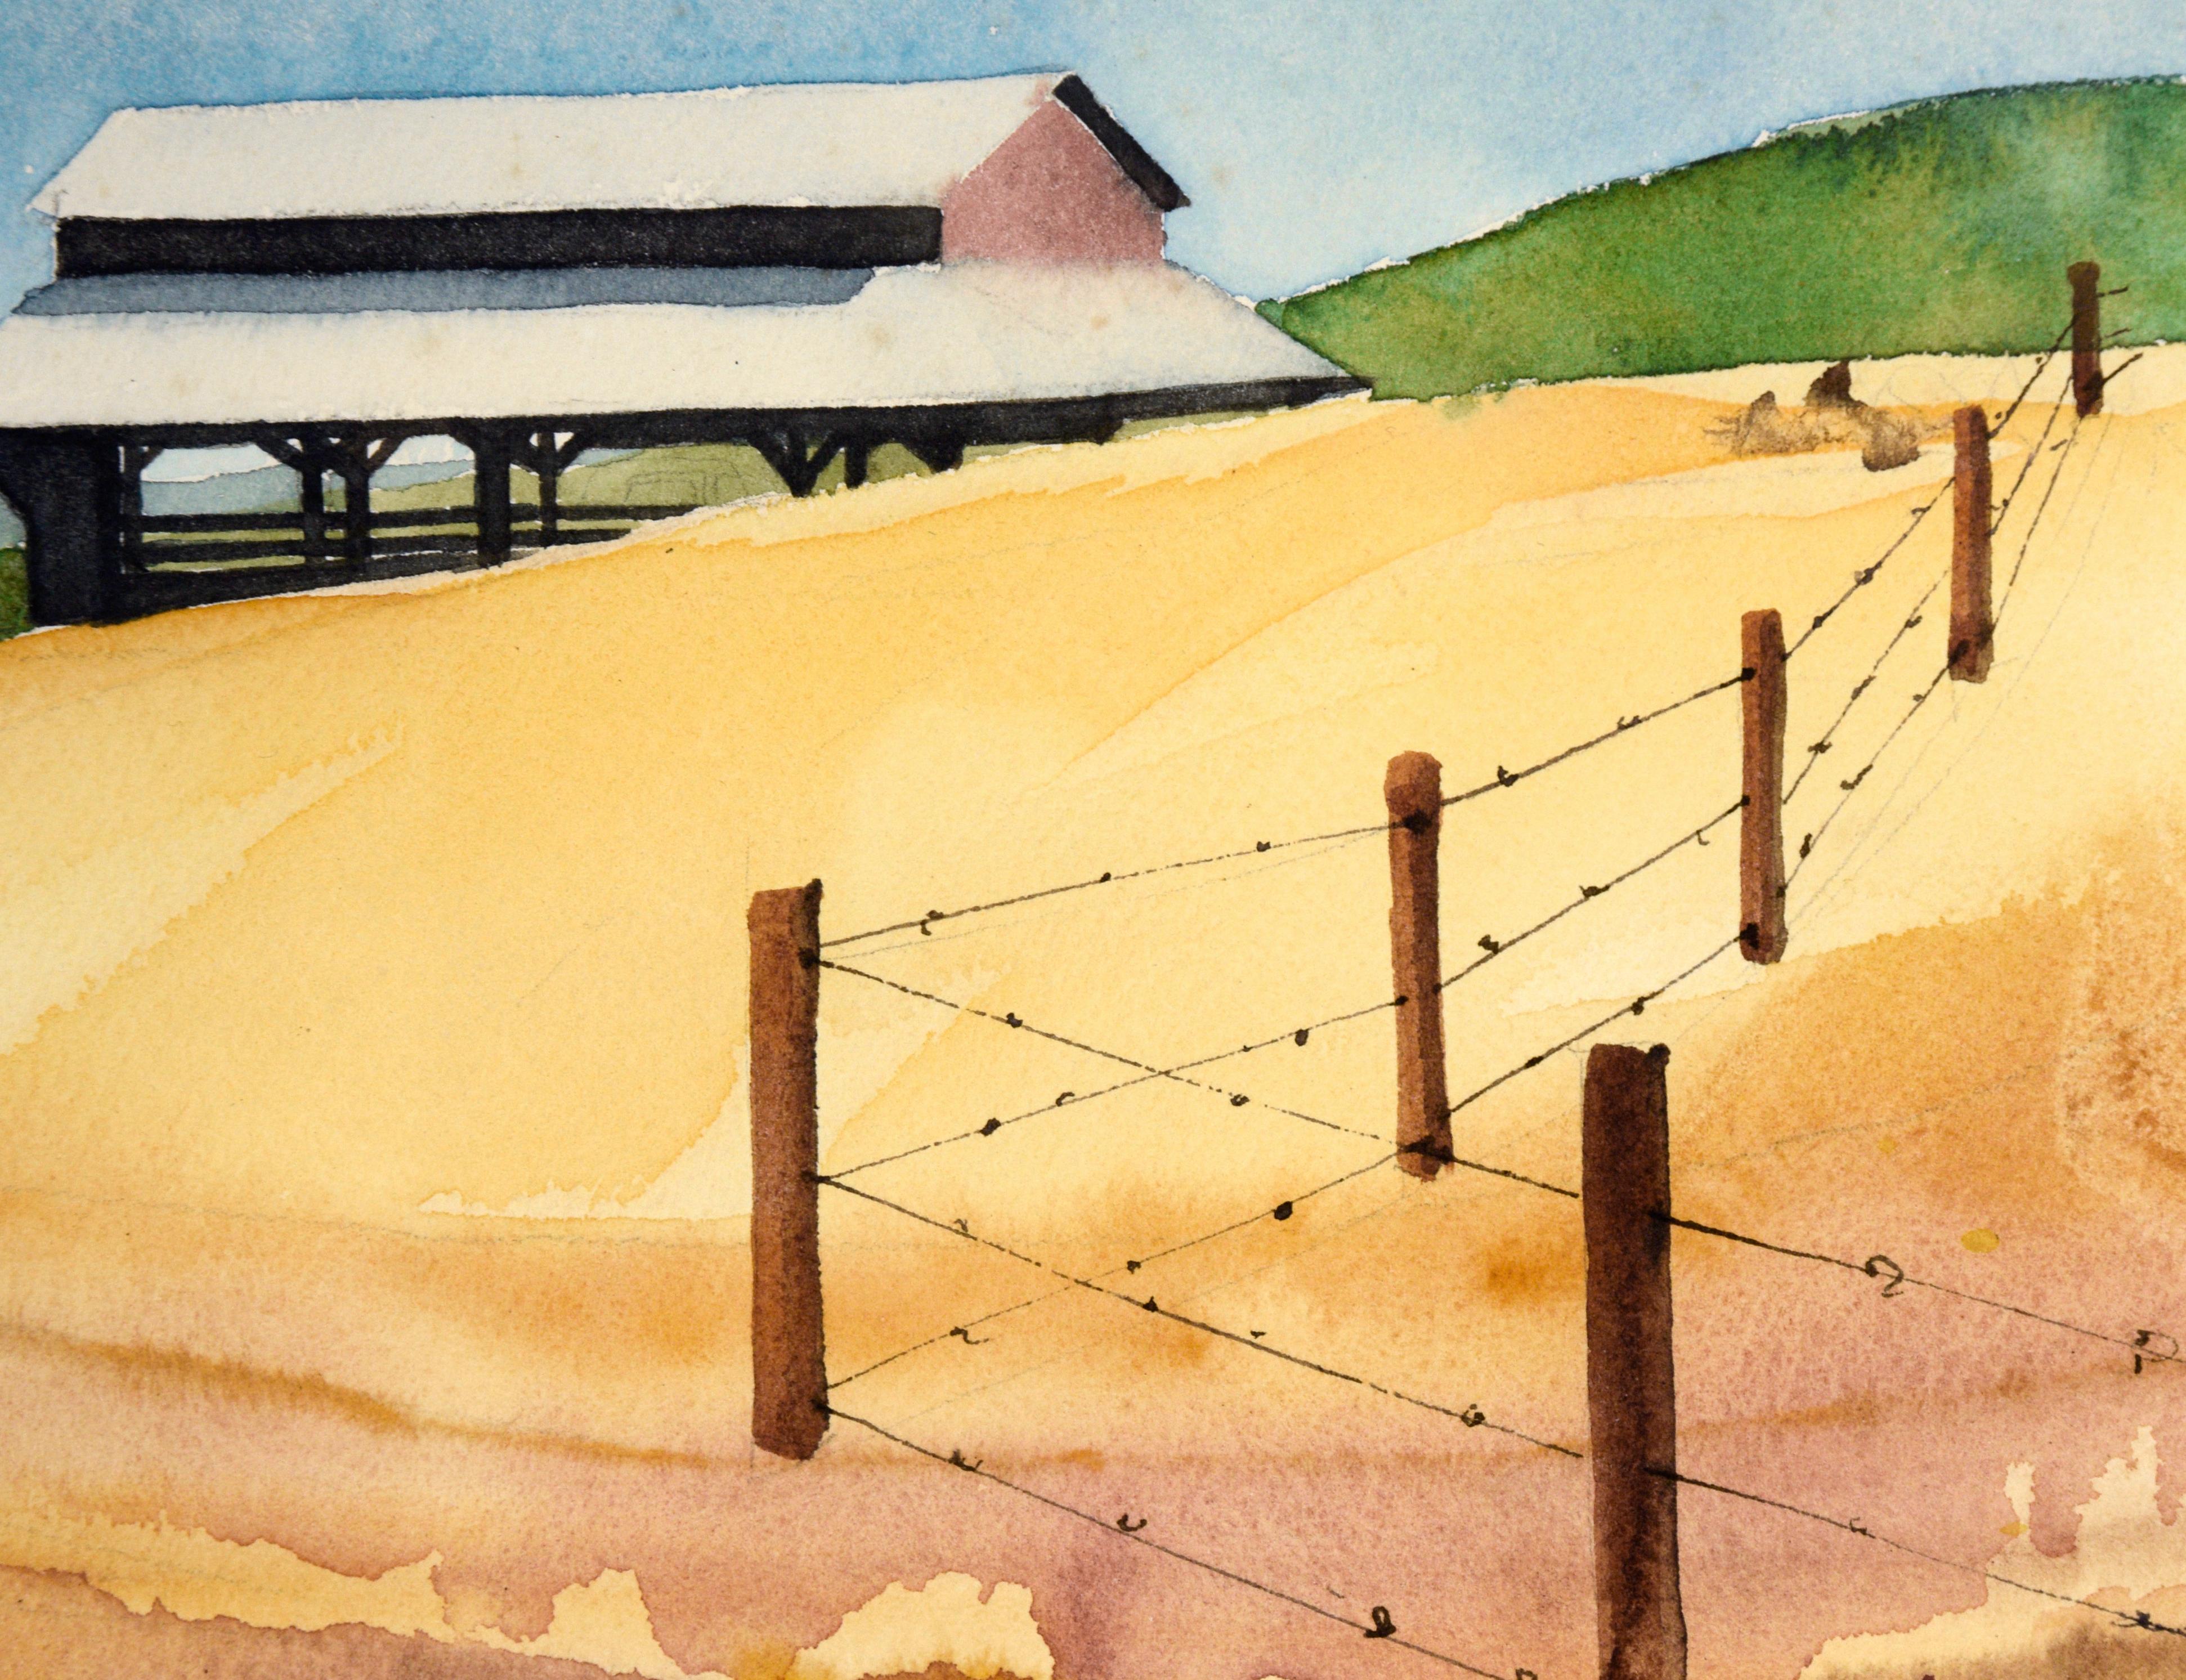 Barn in the Rolling Hills, 1970's Landscape Watercolor on Paper - Beige Landscape Art by Gretchen Guard